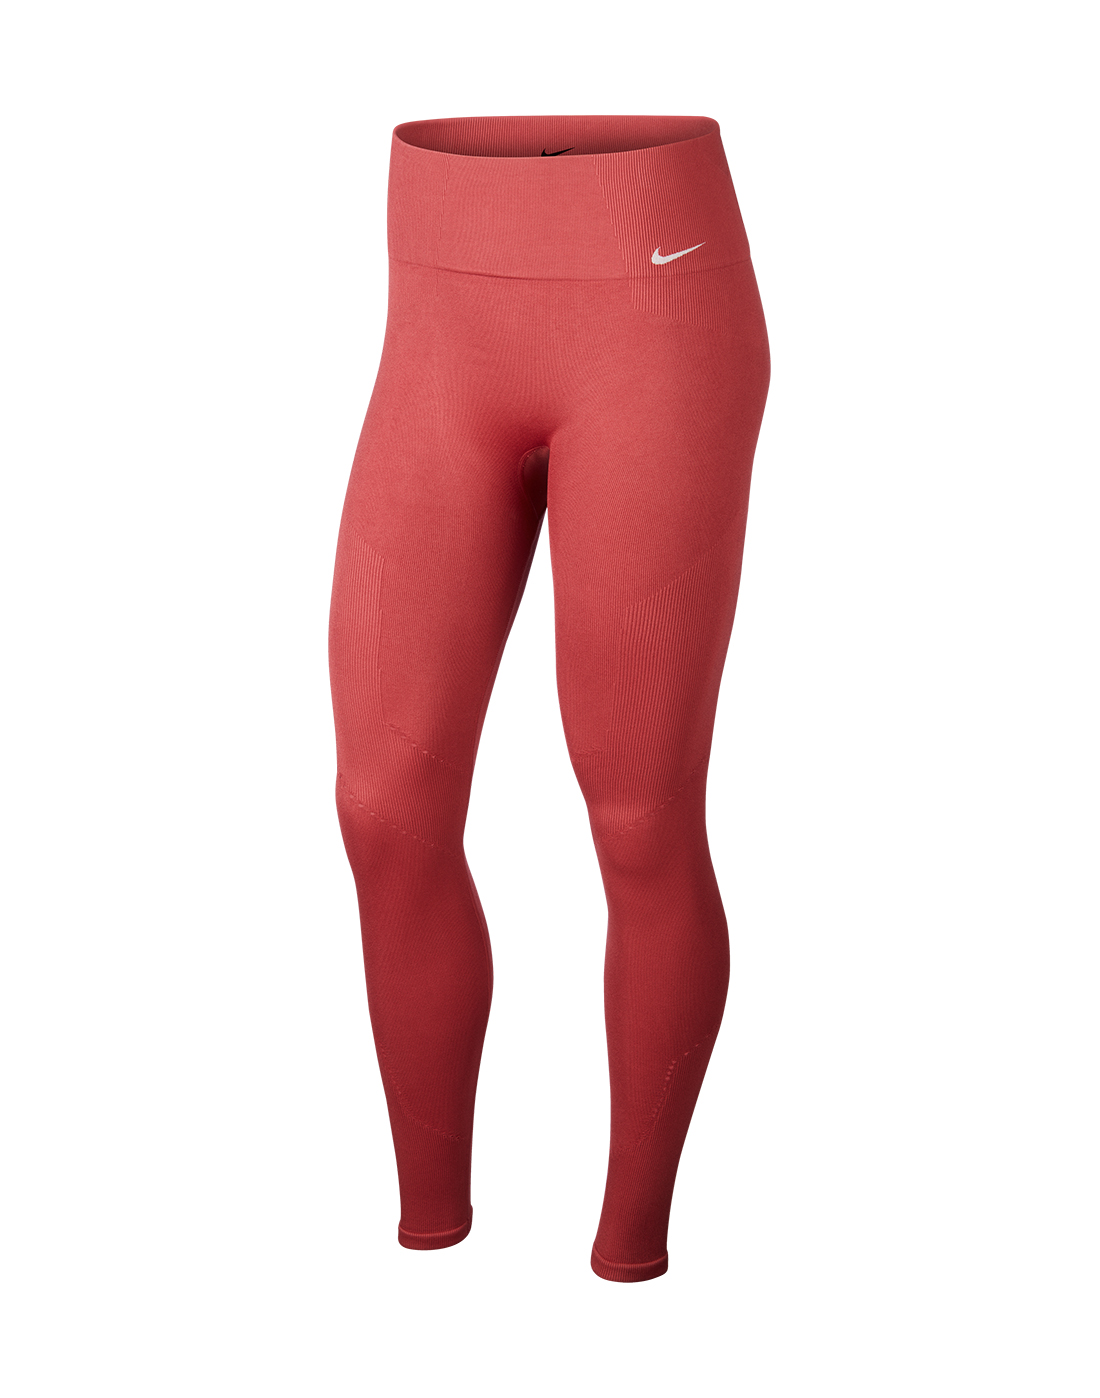 Nike Womens Seamless Power Leggings - Red | Life Sports UK